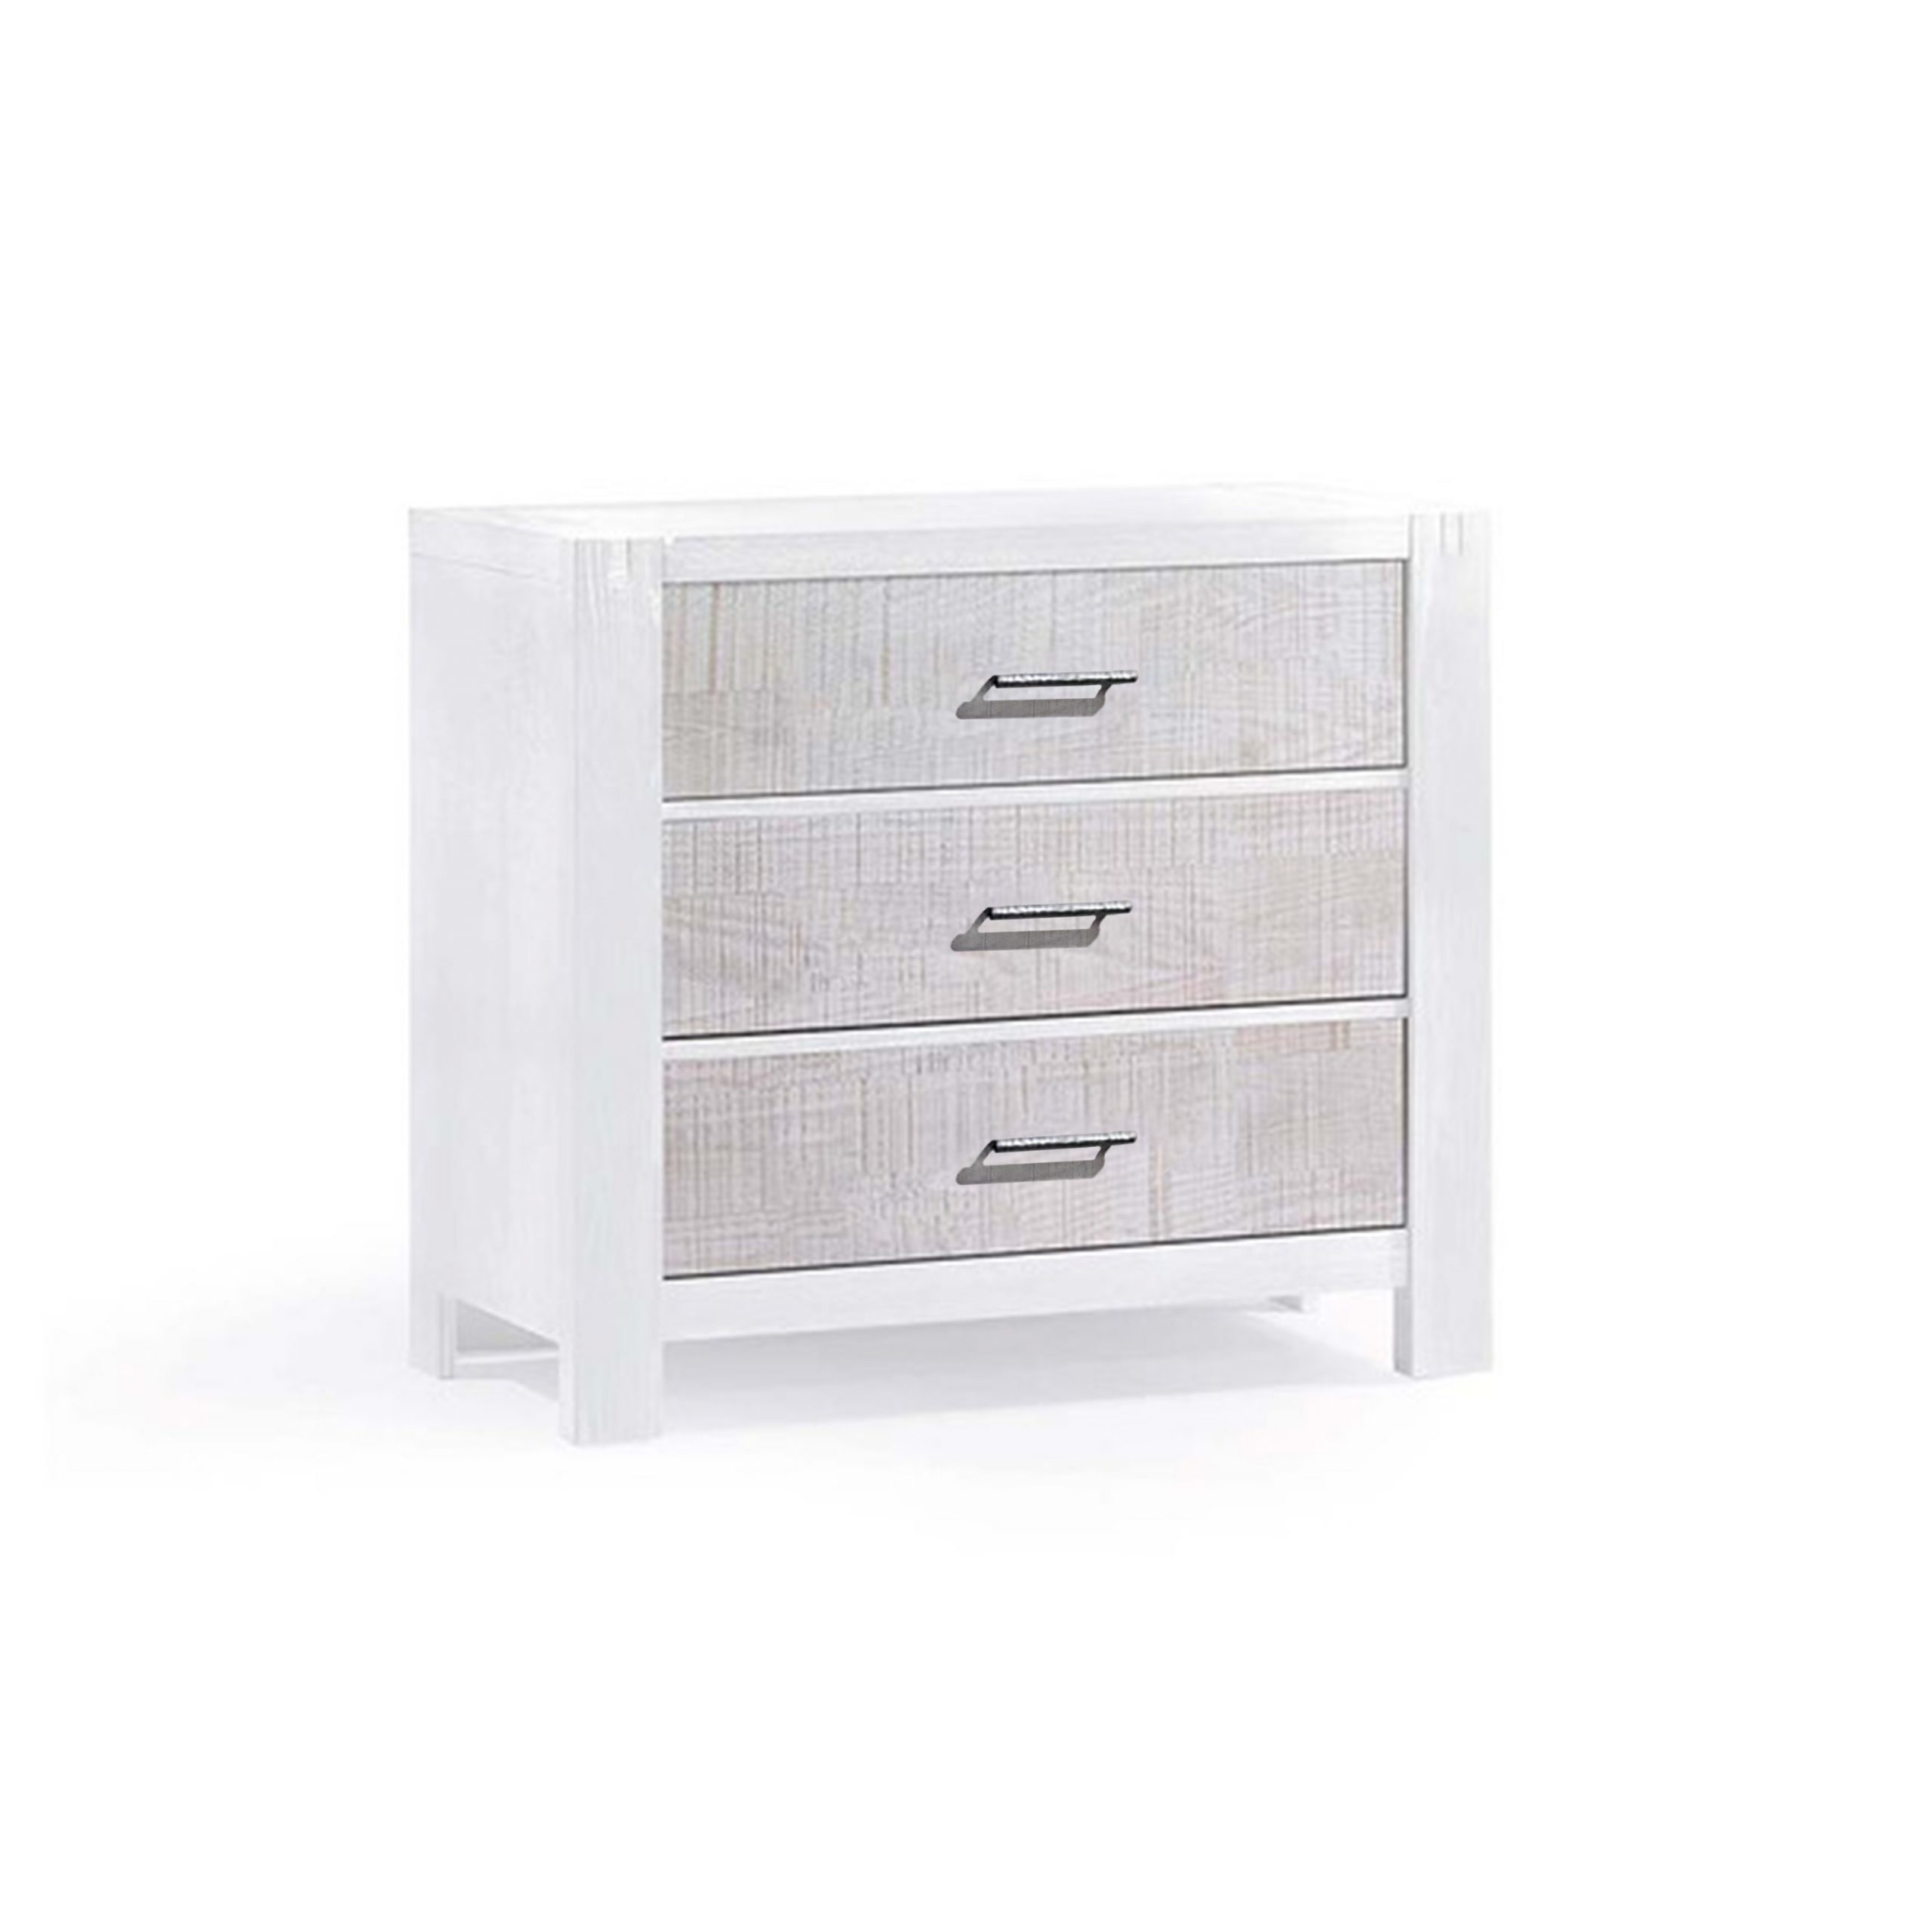 Rustico Moderno 3 Drawer Dresser in White and White Bark